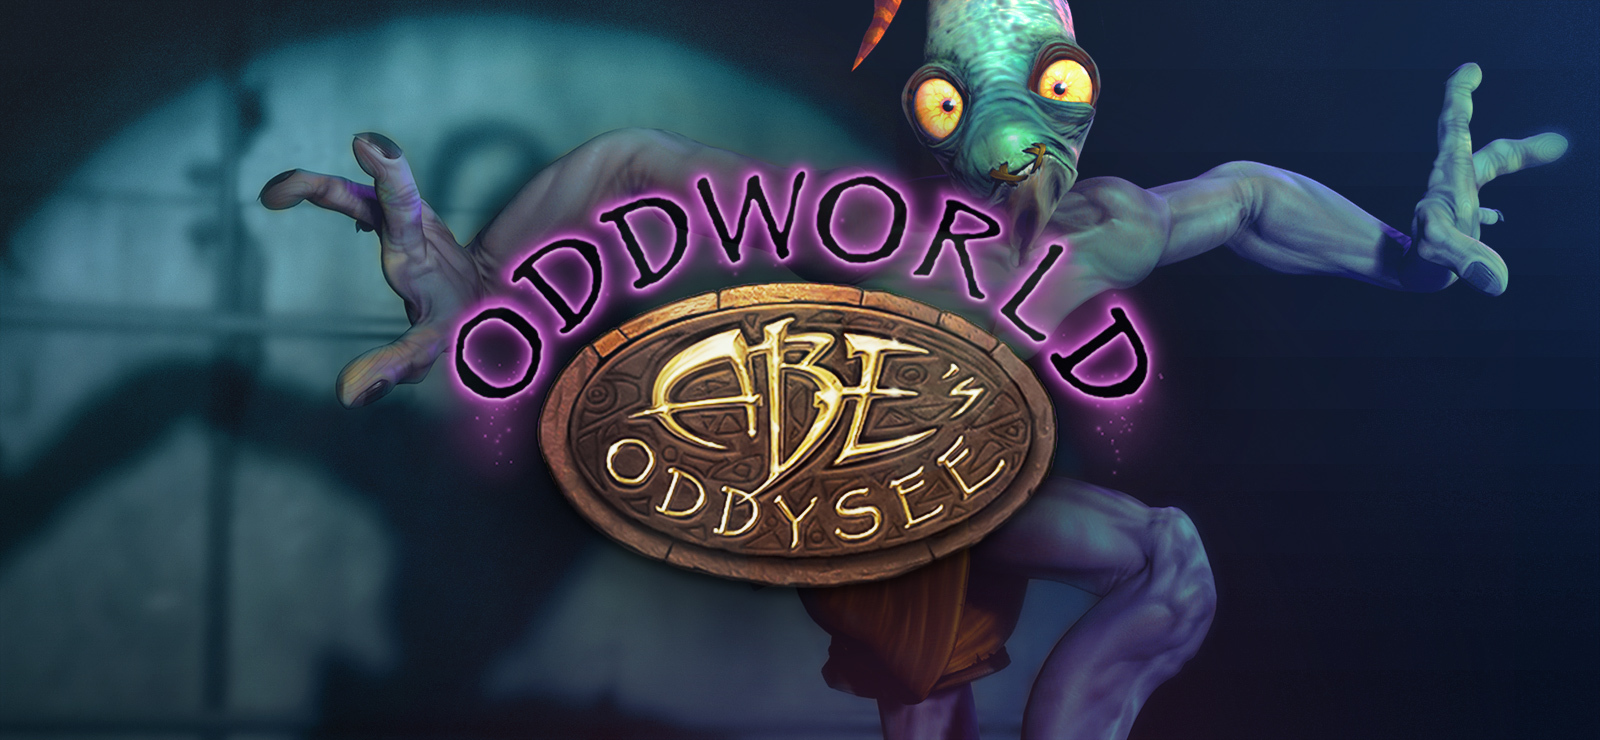 Oddworld Abe's Oddysee